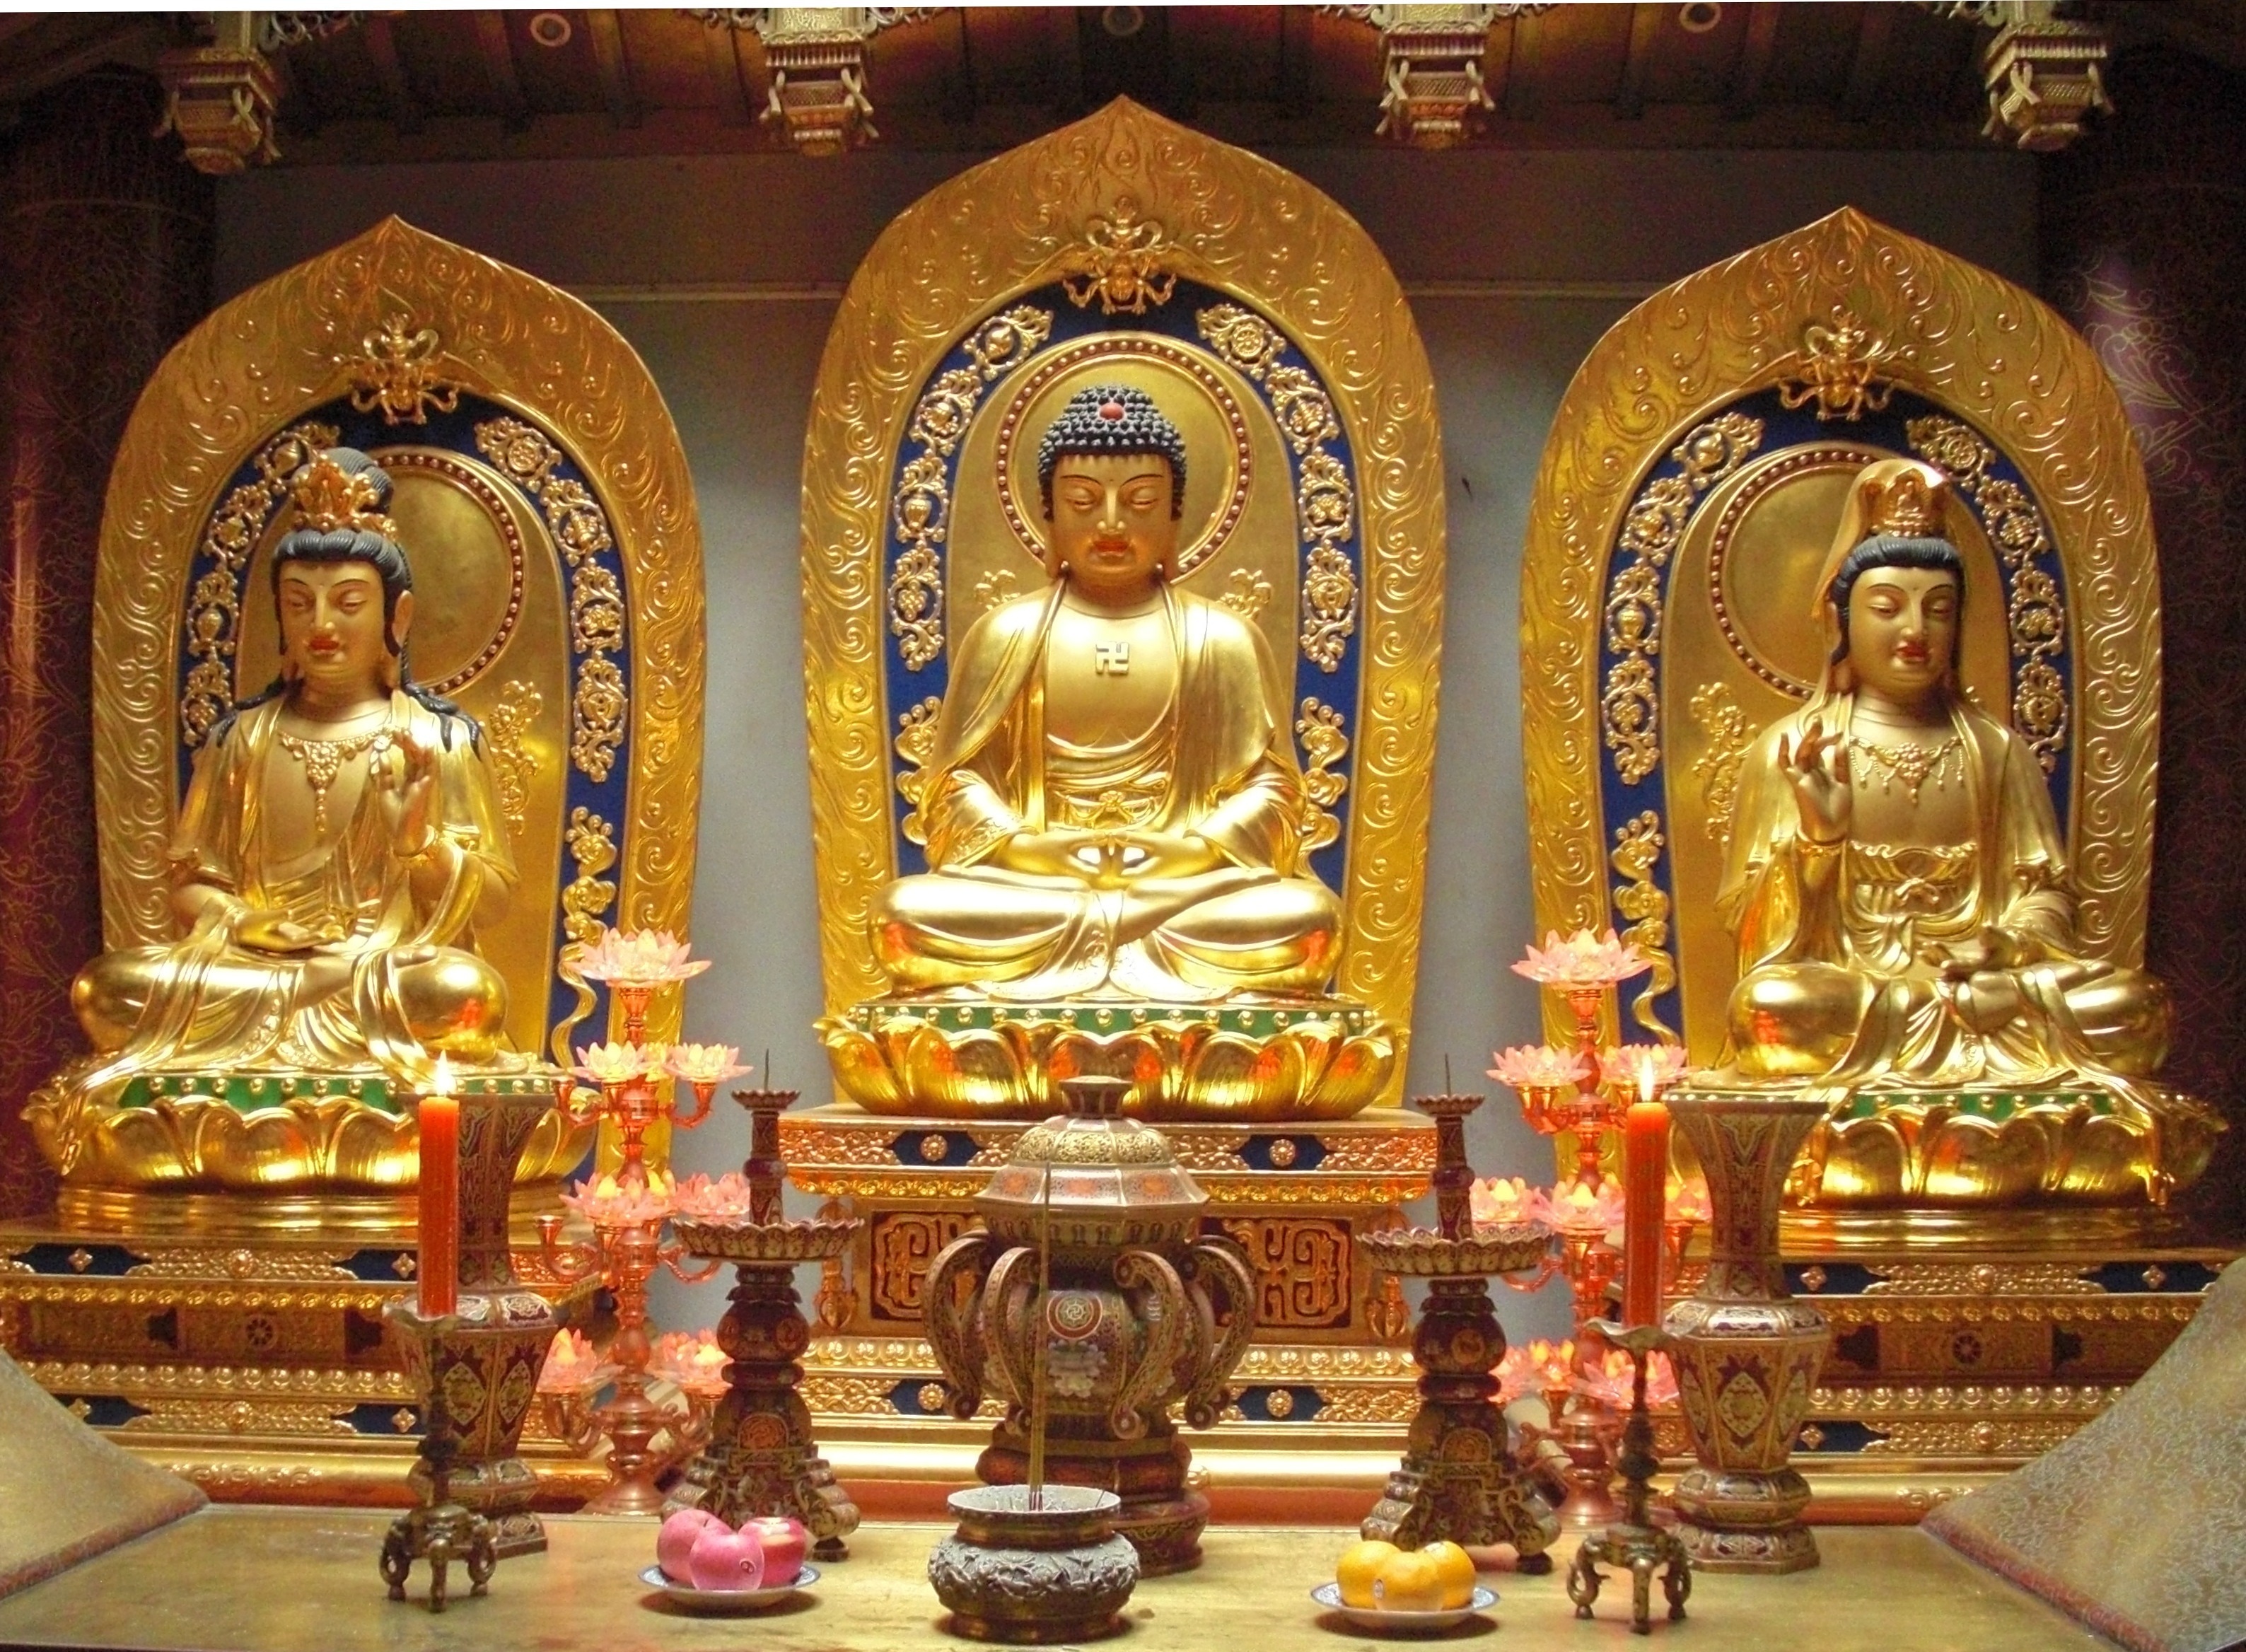 3 buddha figurines